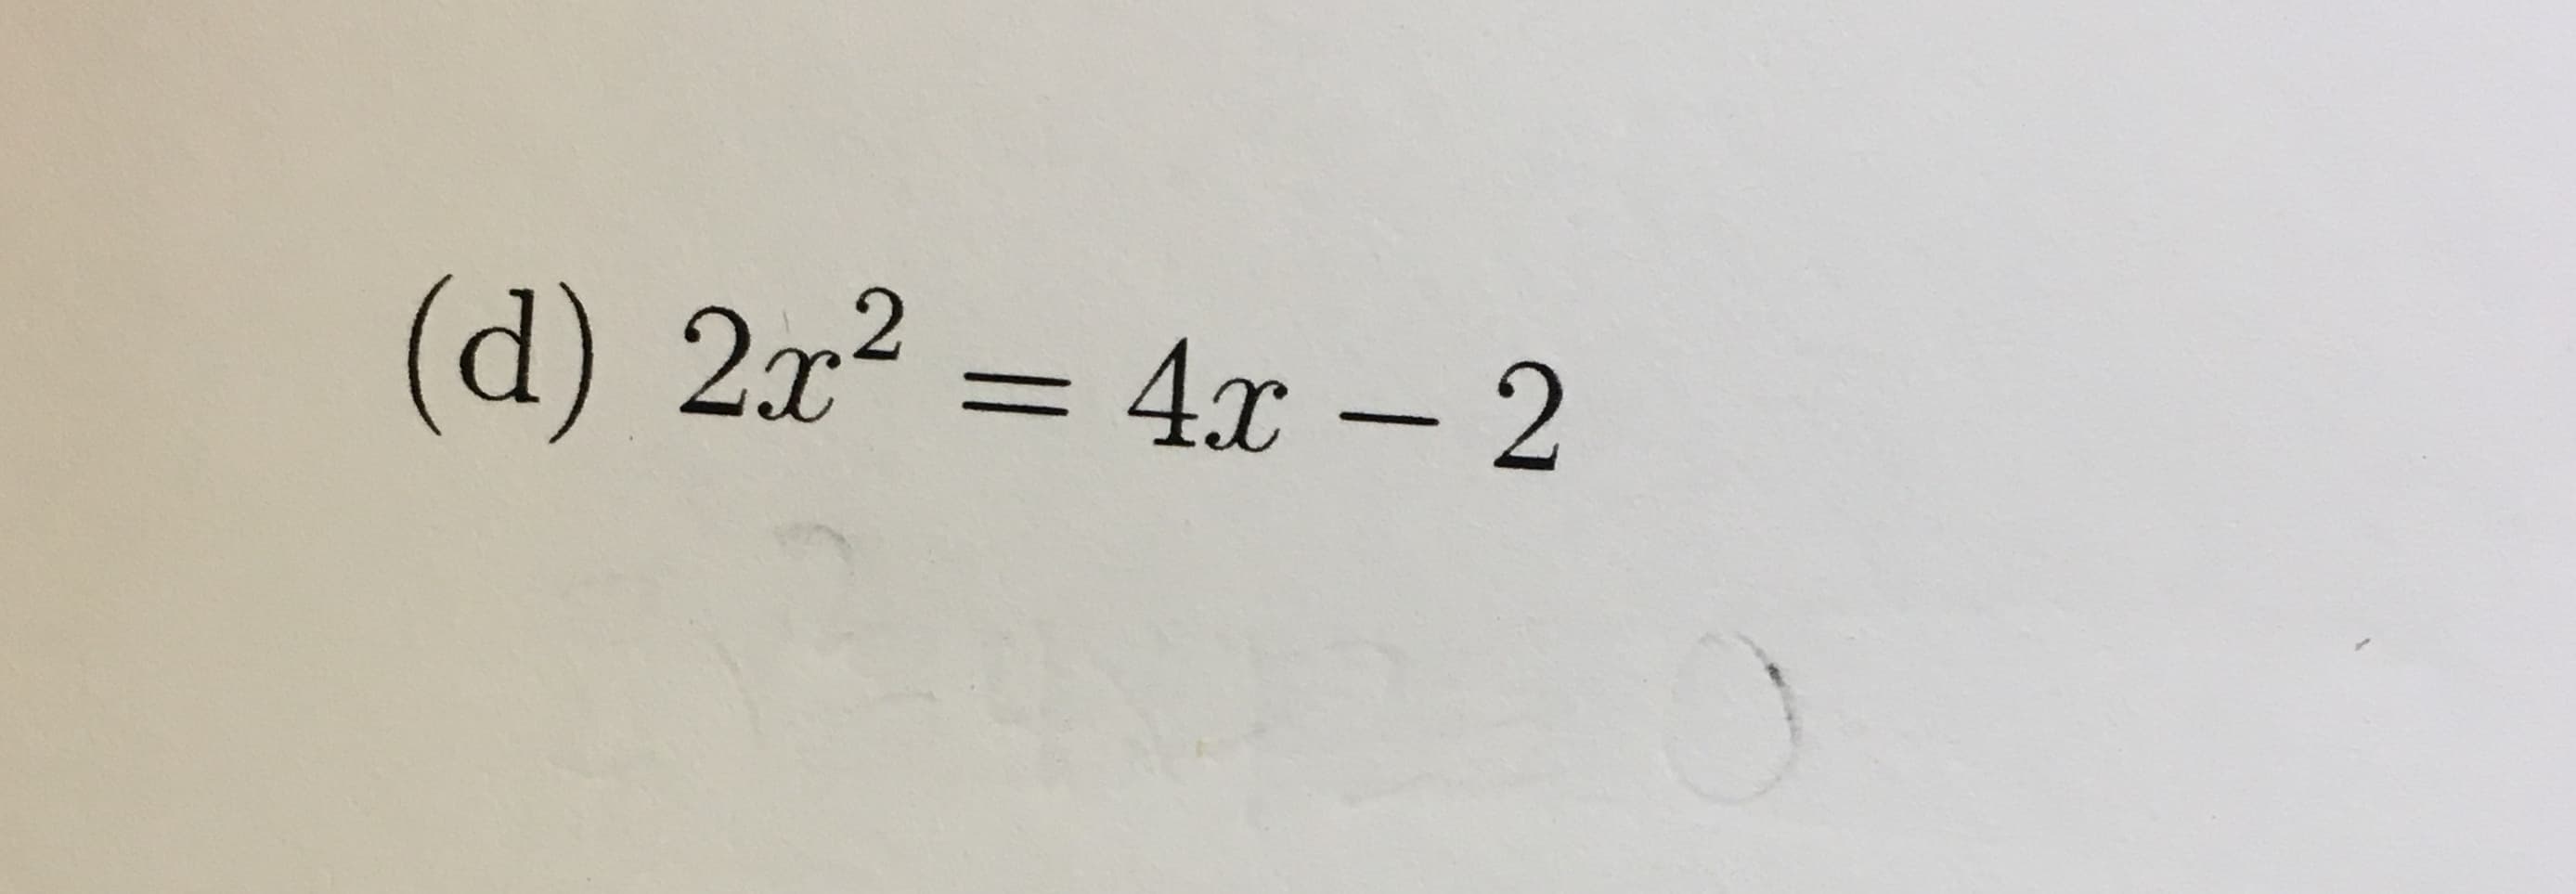 (d) 2x2=4x-2
